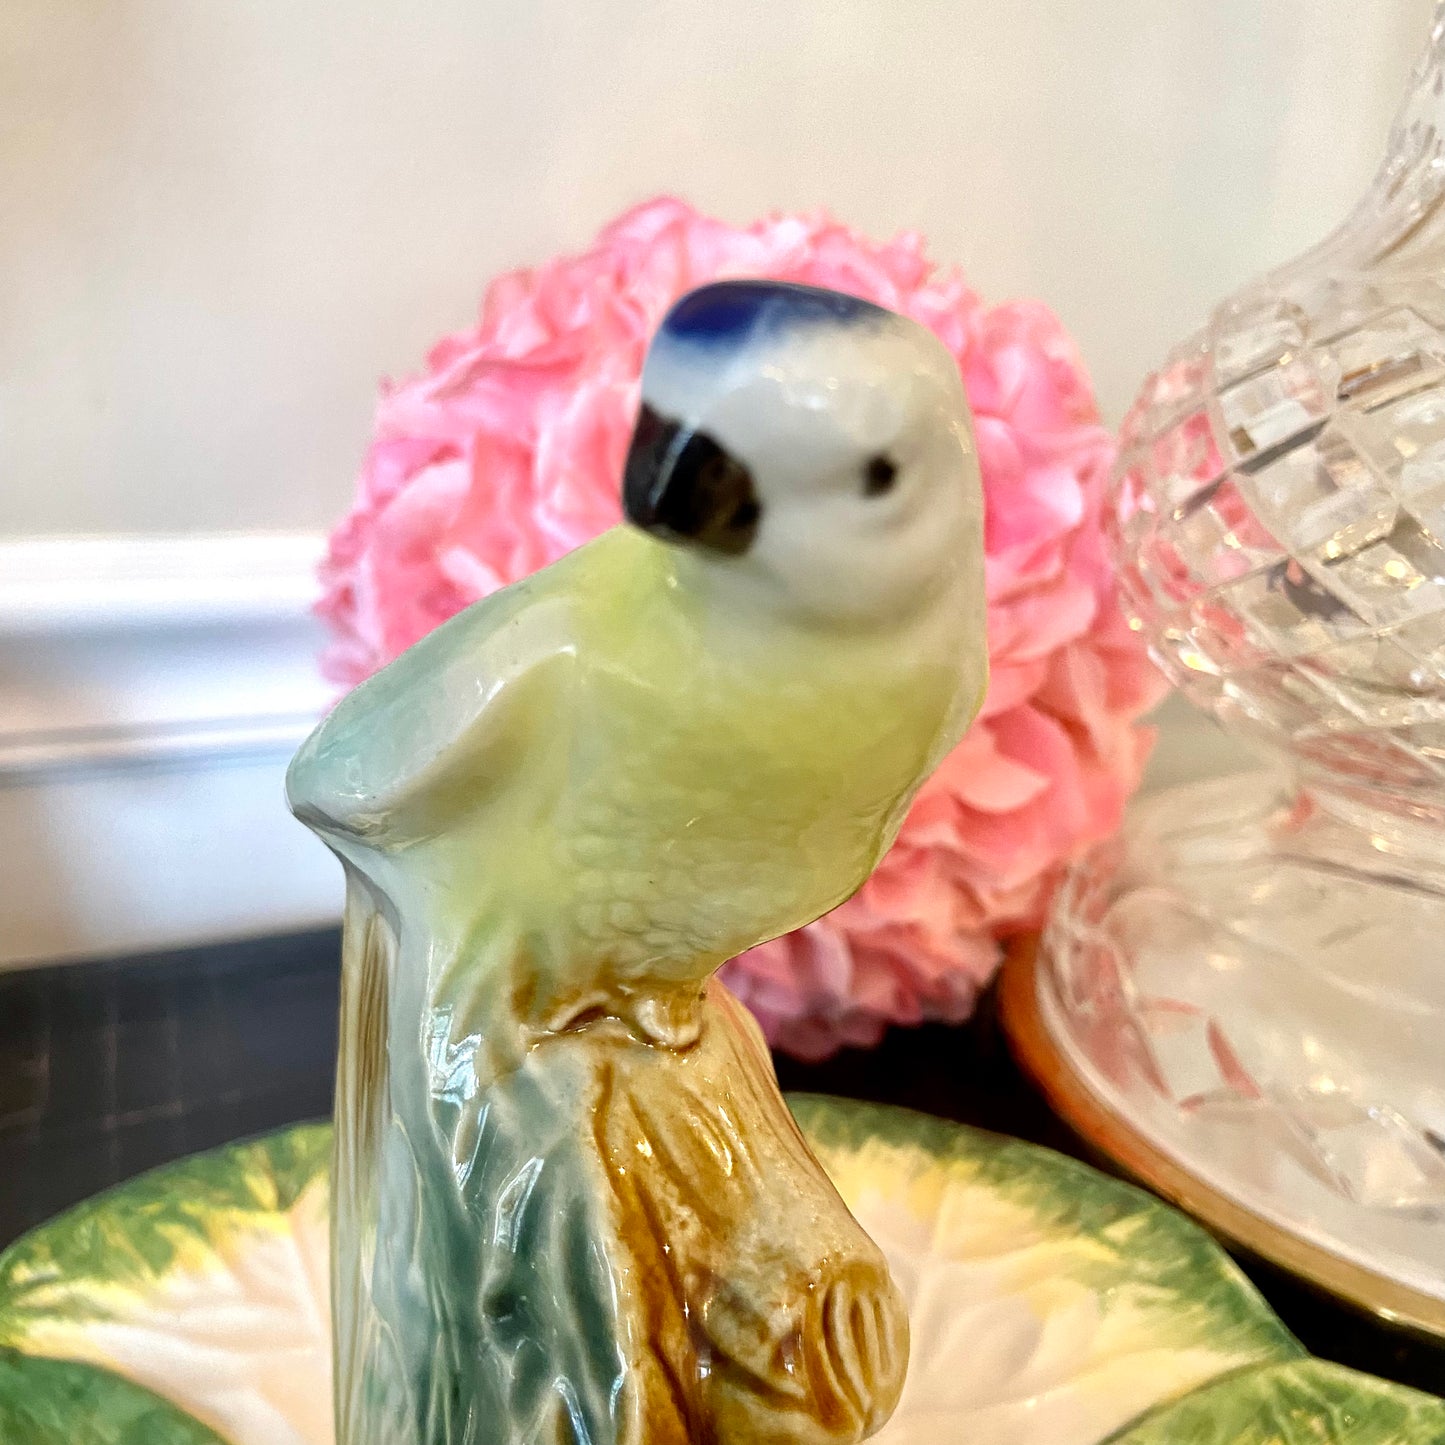 Stunning porcelain majolica style bird.